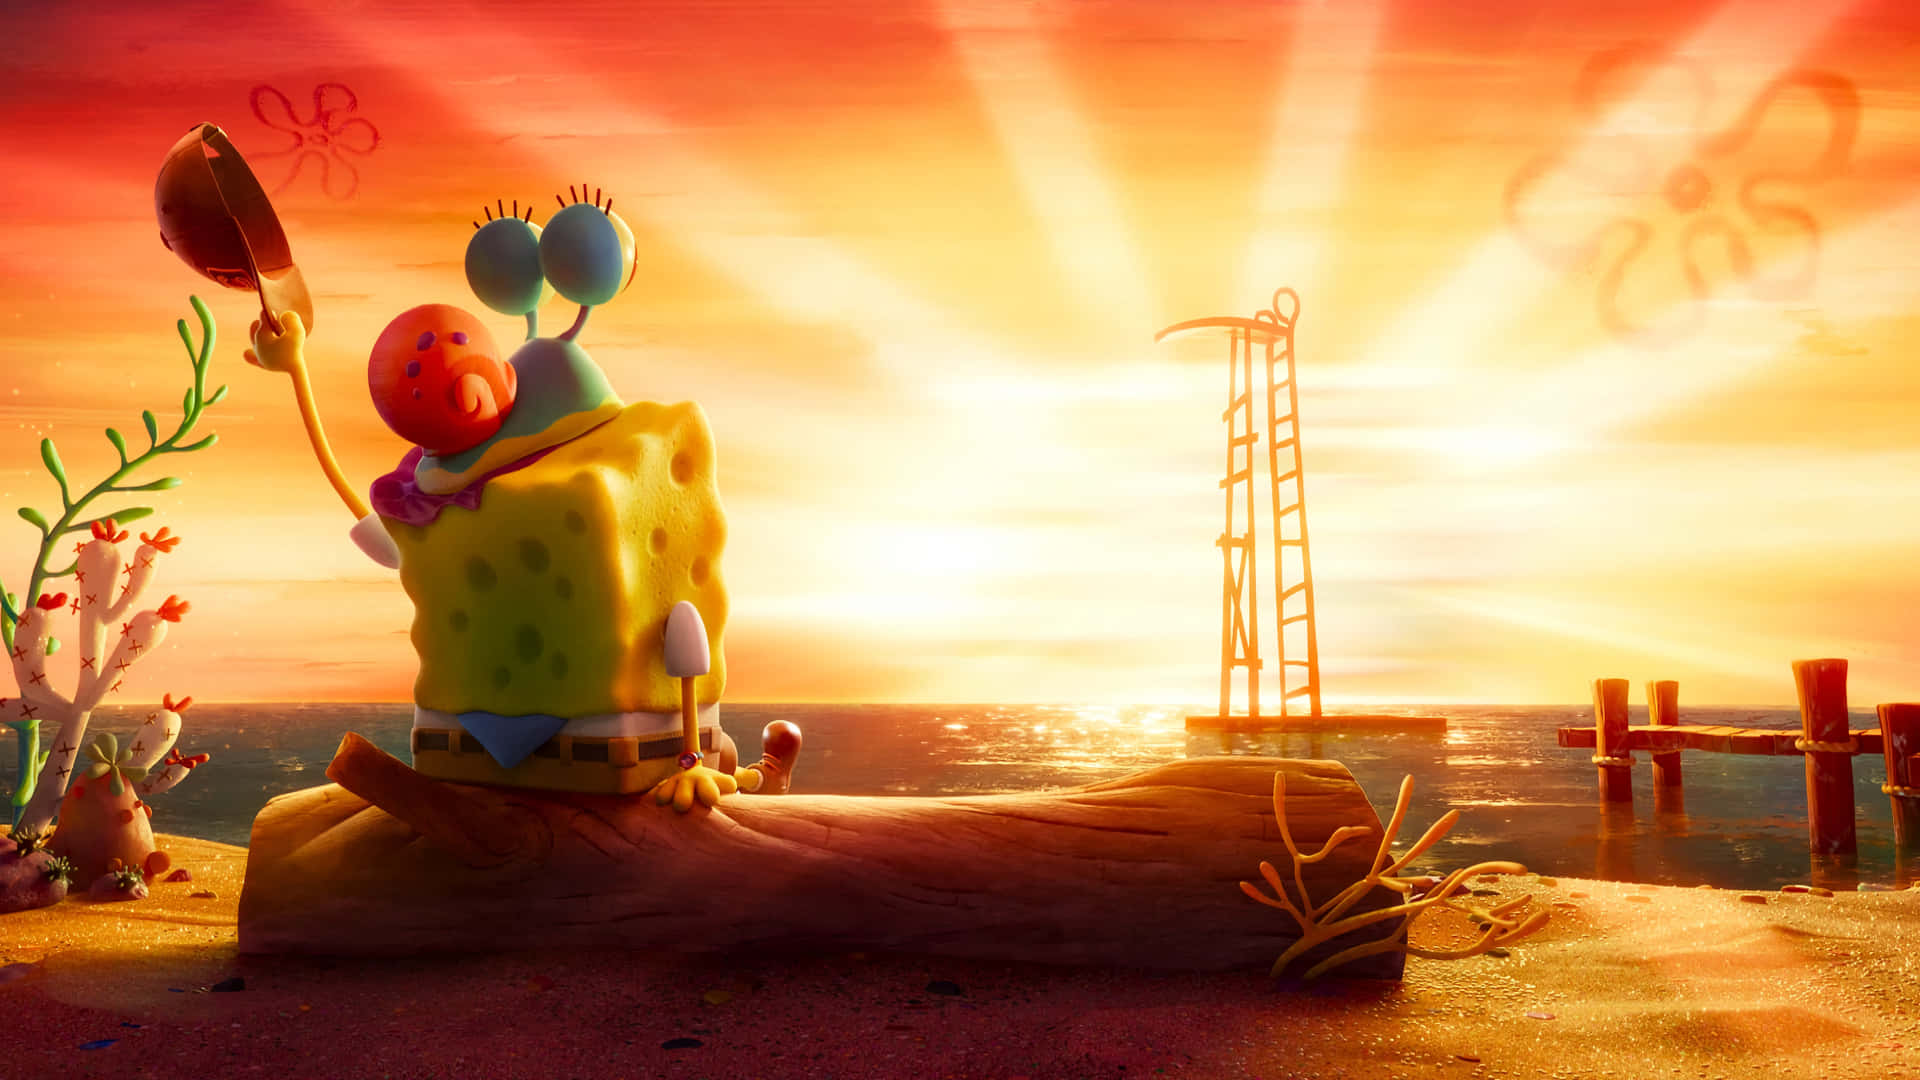 SpongeBob Pfp Solnedgang: Tag en pause ved solnedgang på stranden Wallpaper